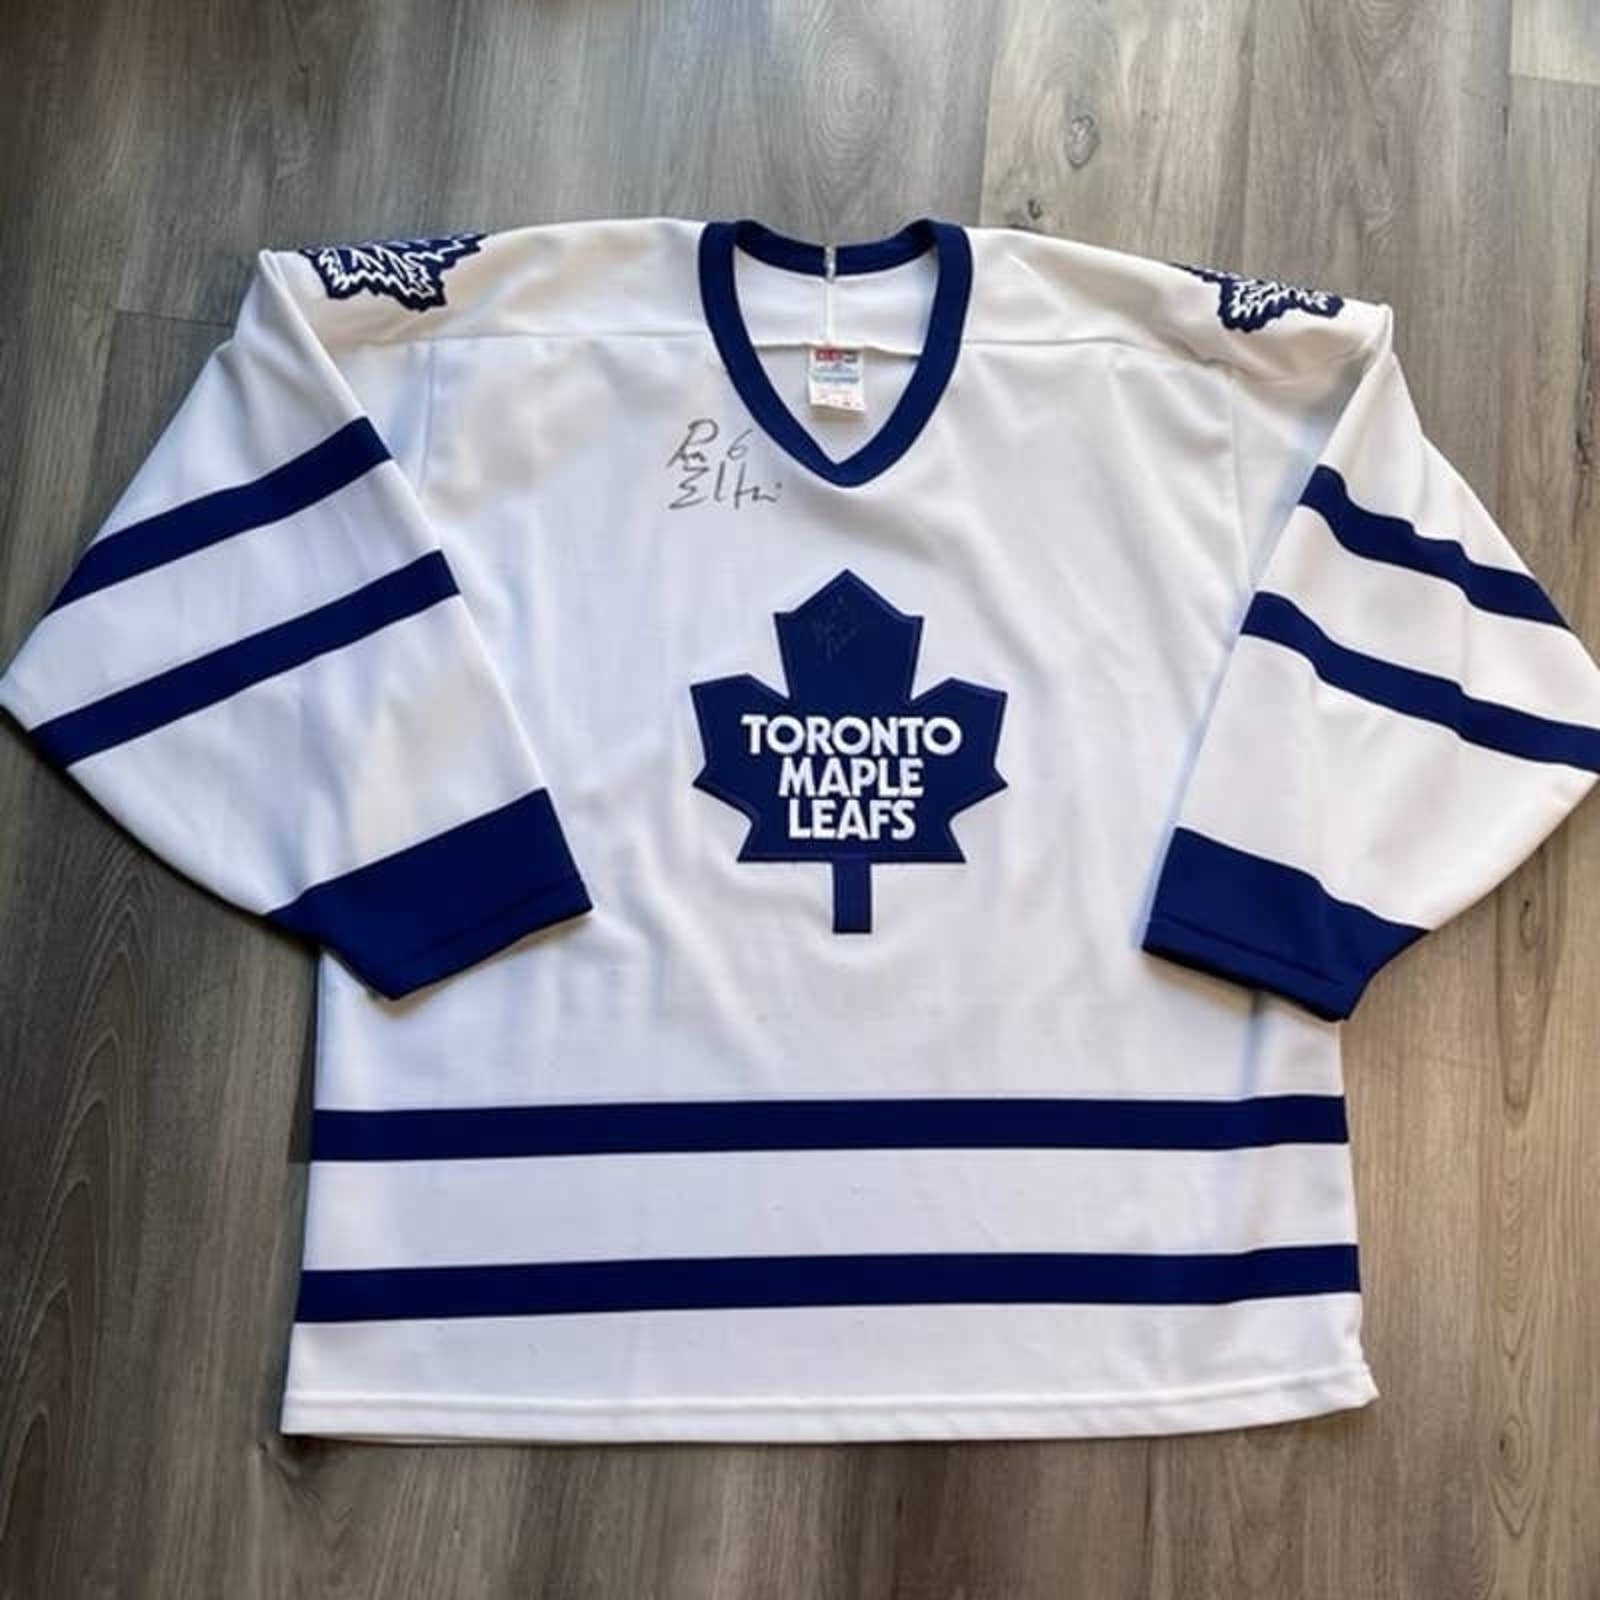 Borje Salming Toronto Maple Leafs Autographed Retro CCM Hockey